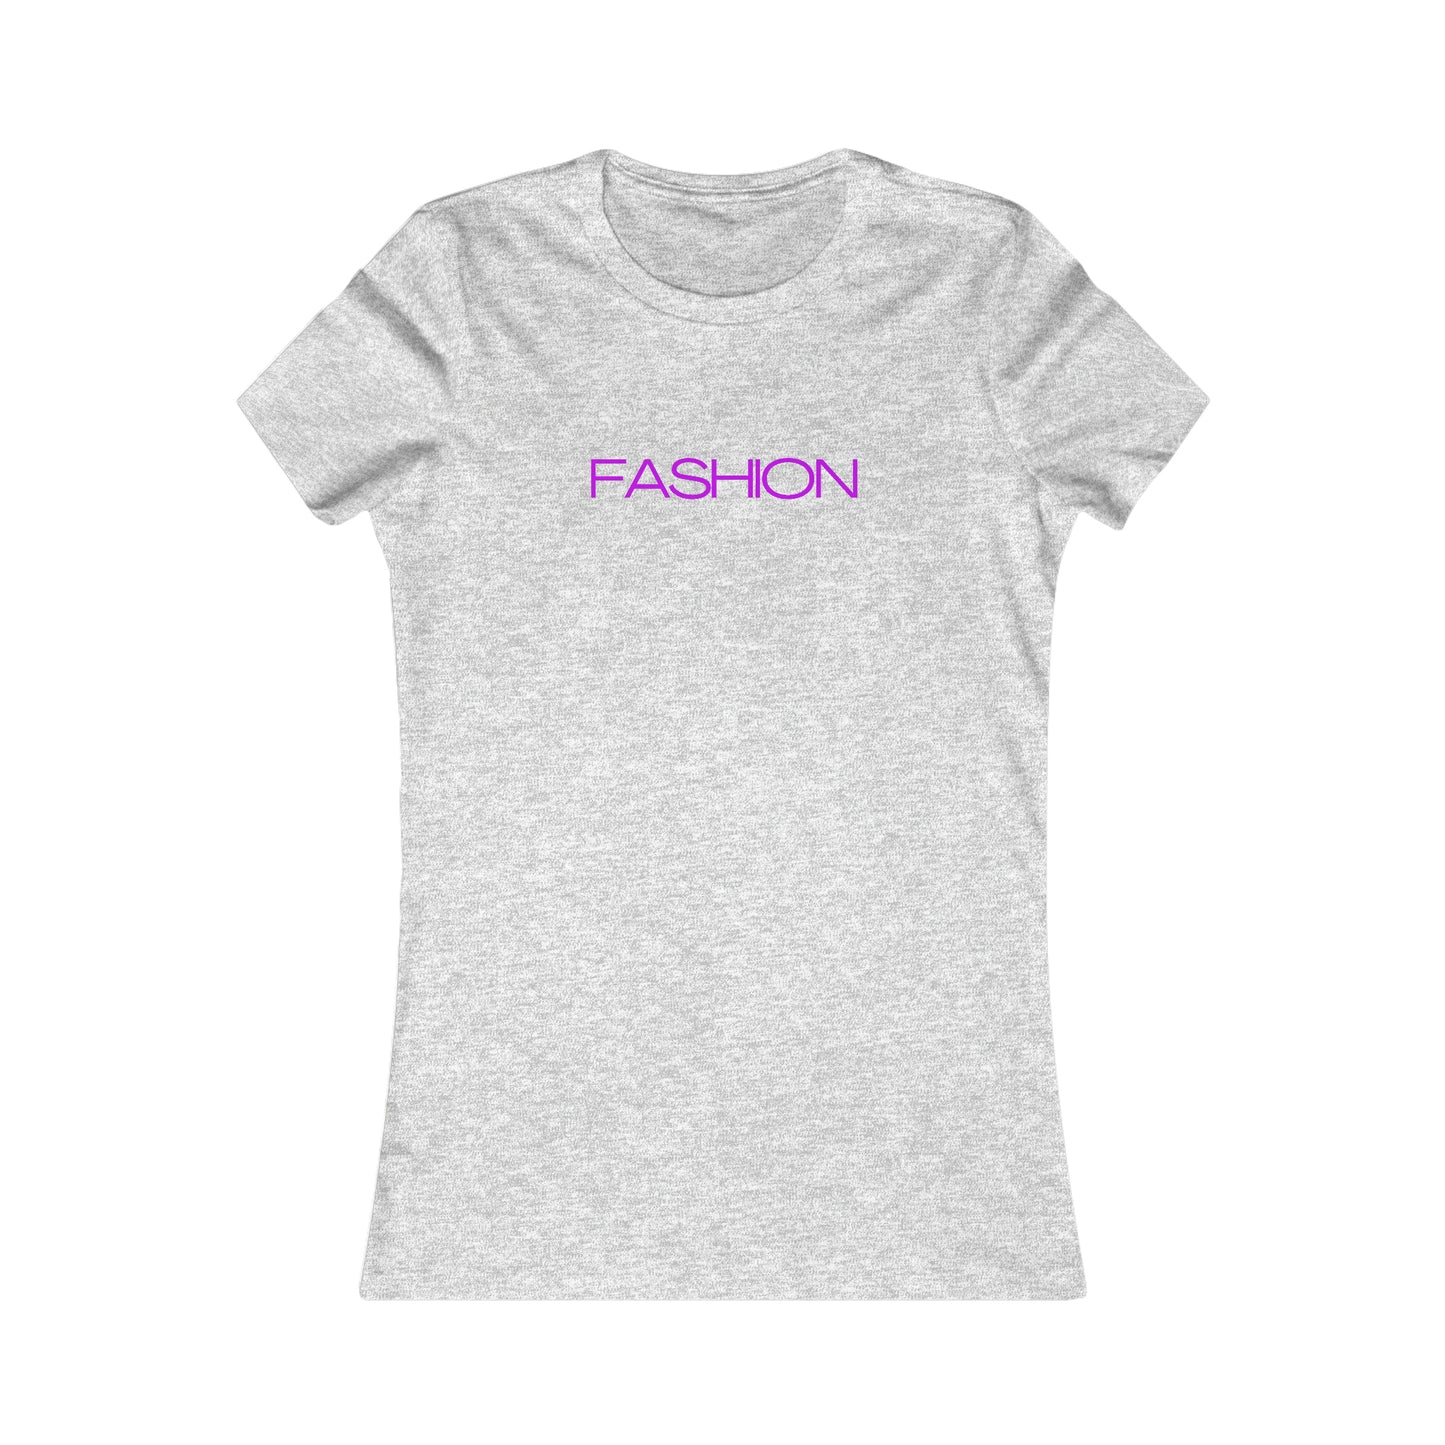 FASHION - Women's Favorite Tee